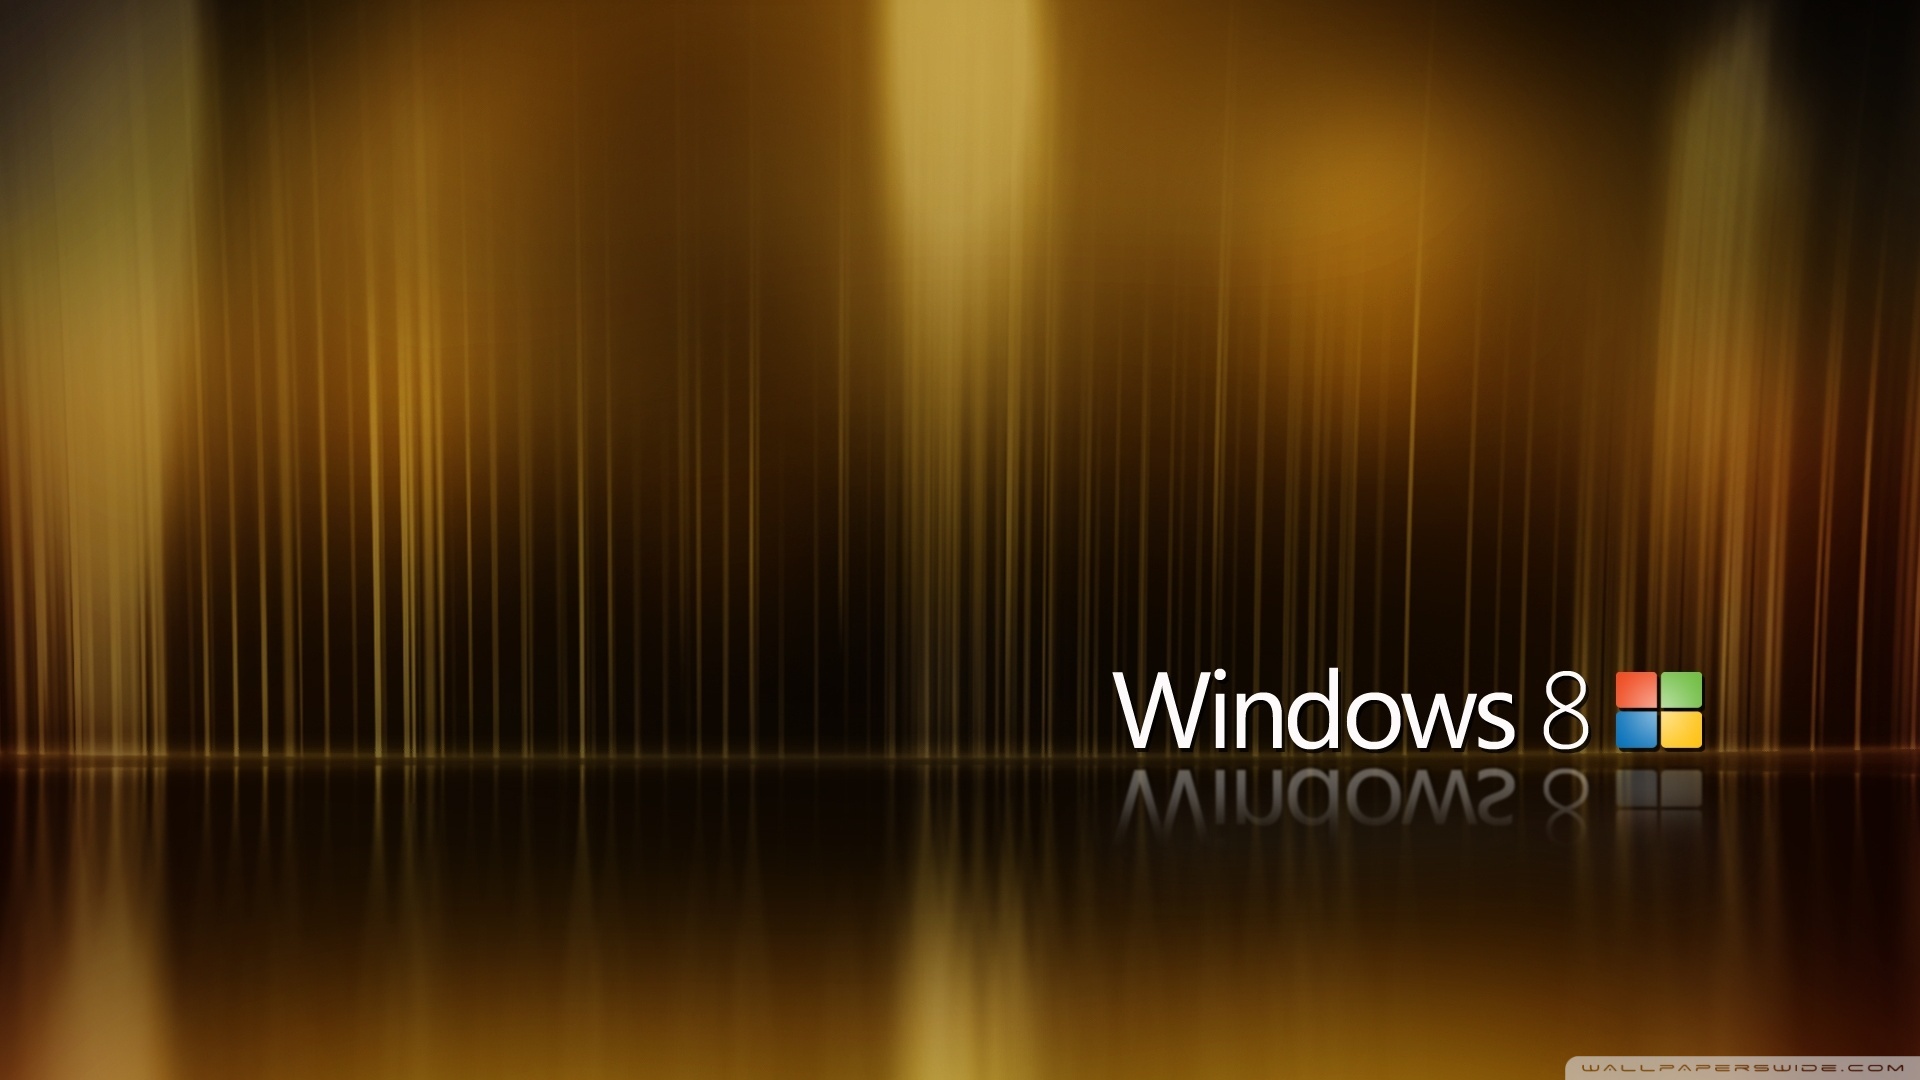 Windows 8 Wallpapers HD For Desktop